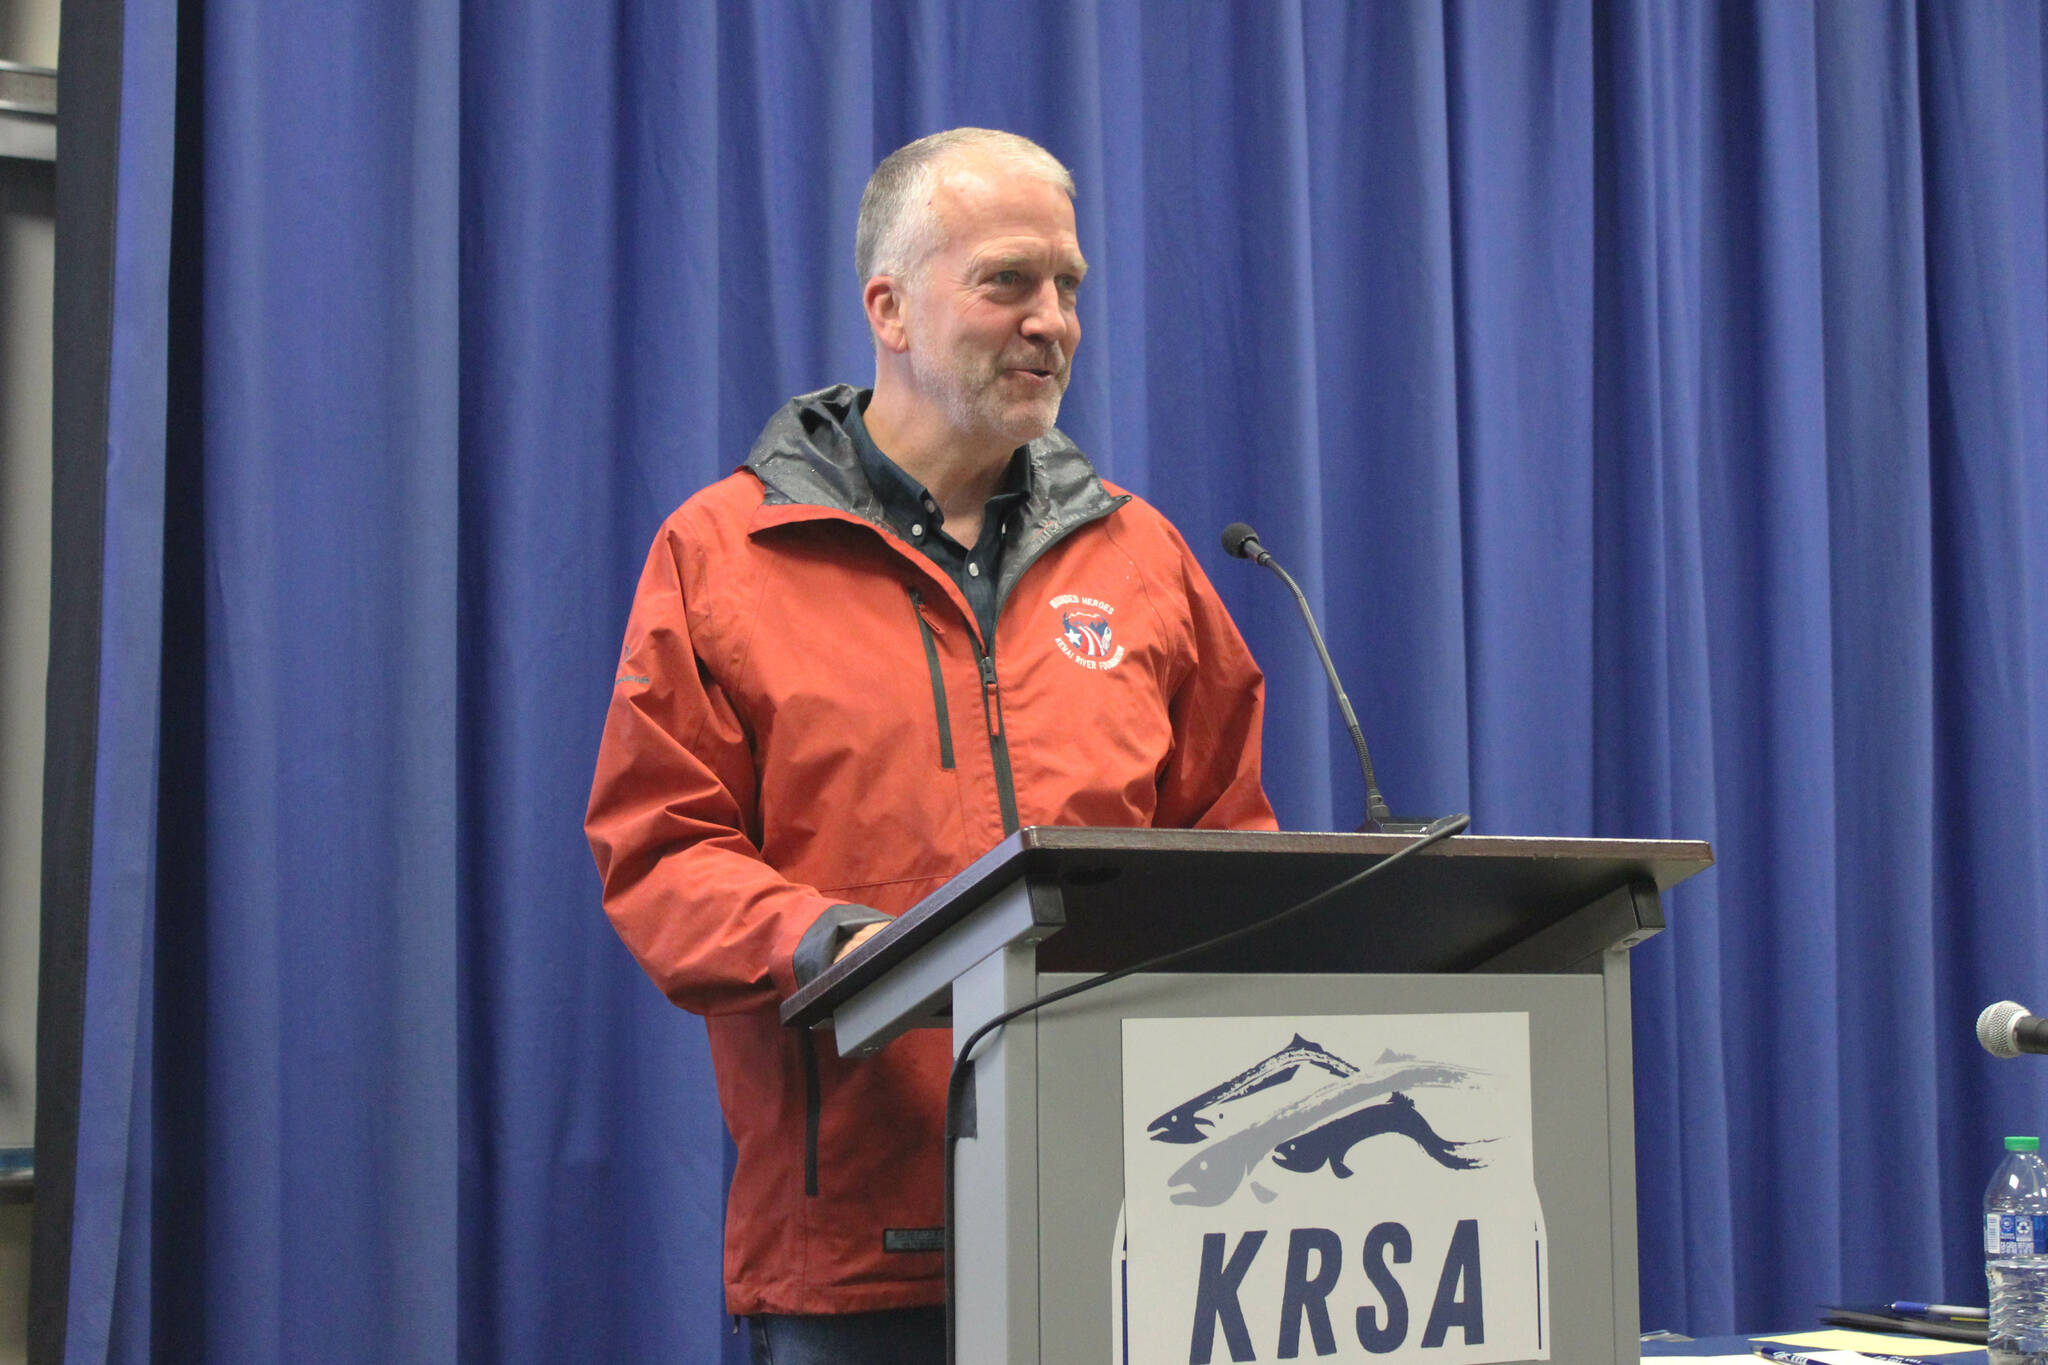 Sen. Dan Sullivan speaks at the Kenai Classic Roundtable at Kenai Peninsula College on Wednesday, Aug. 17, 2022 near Soldotna, Alaska. (Ashlyn O’Hara/Peninsula Clarion)